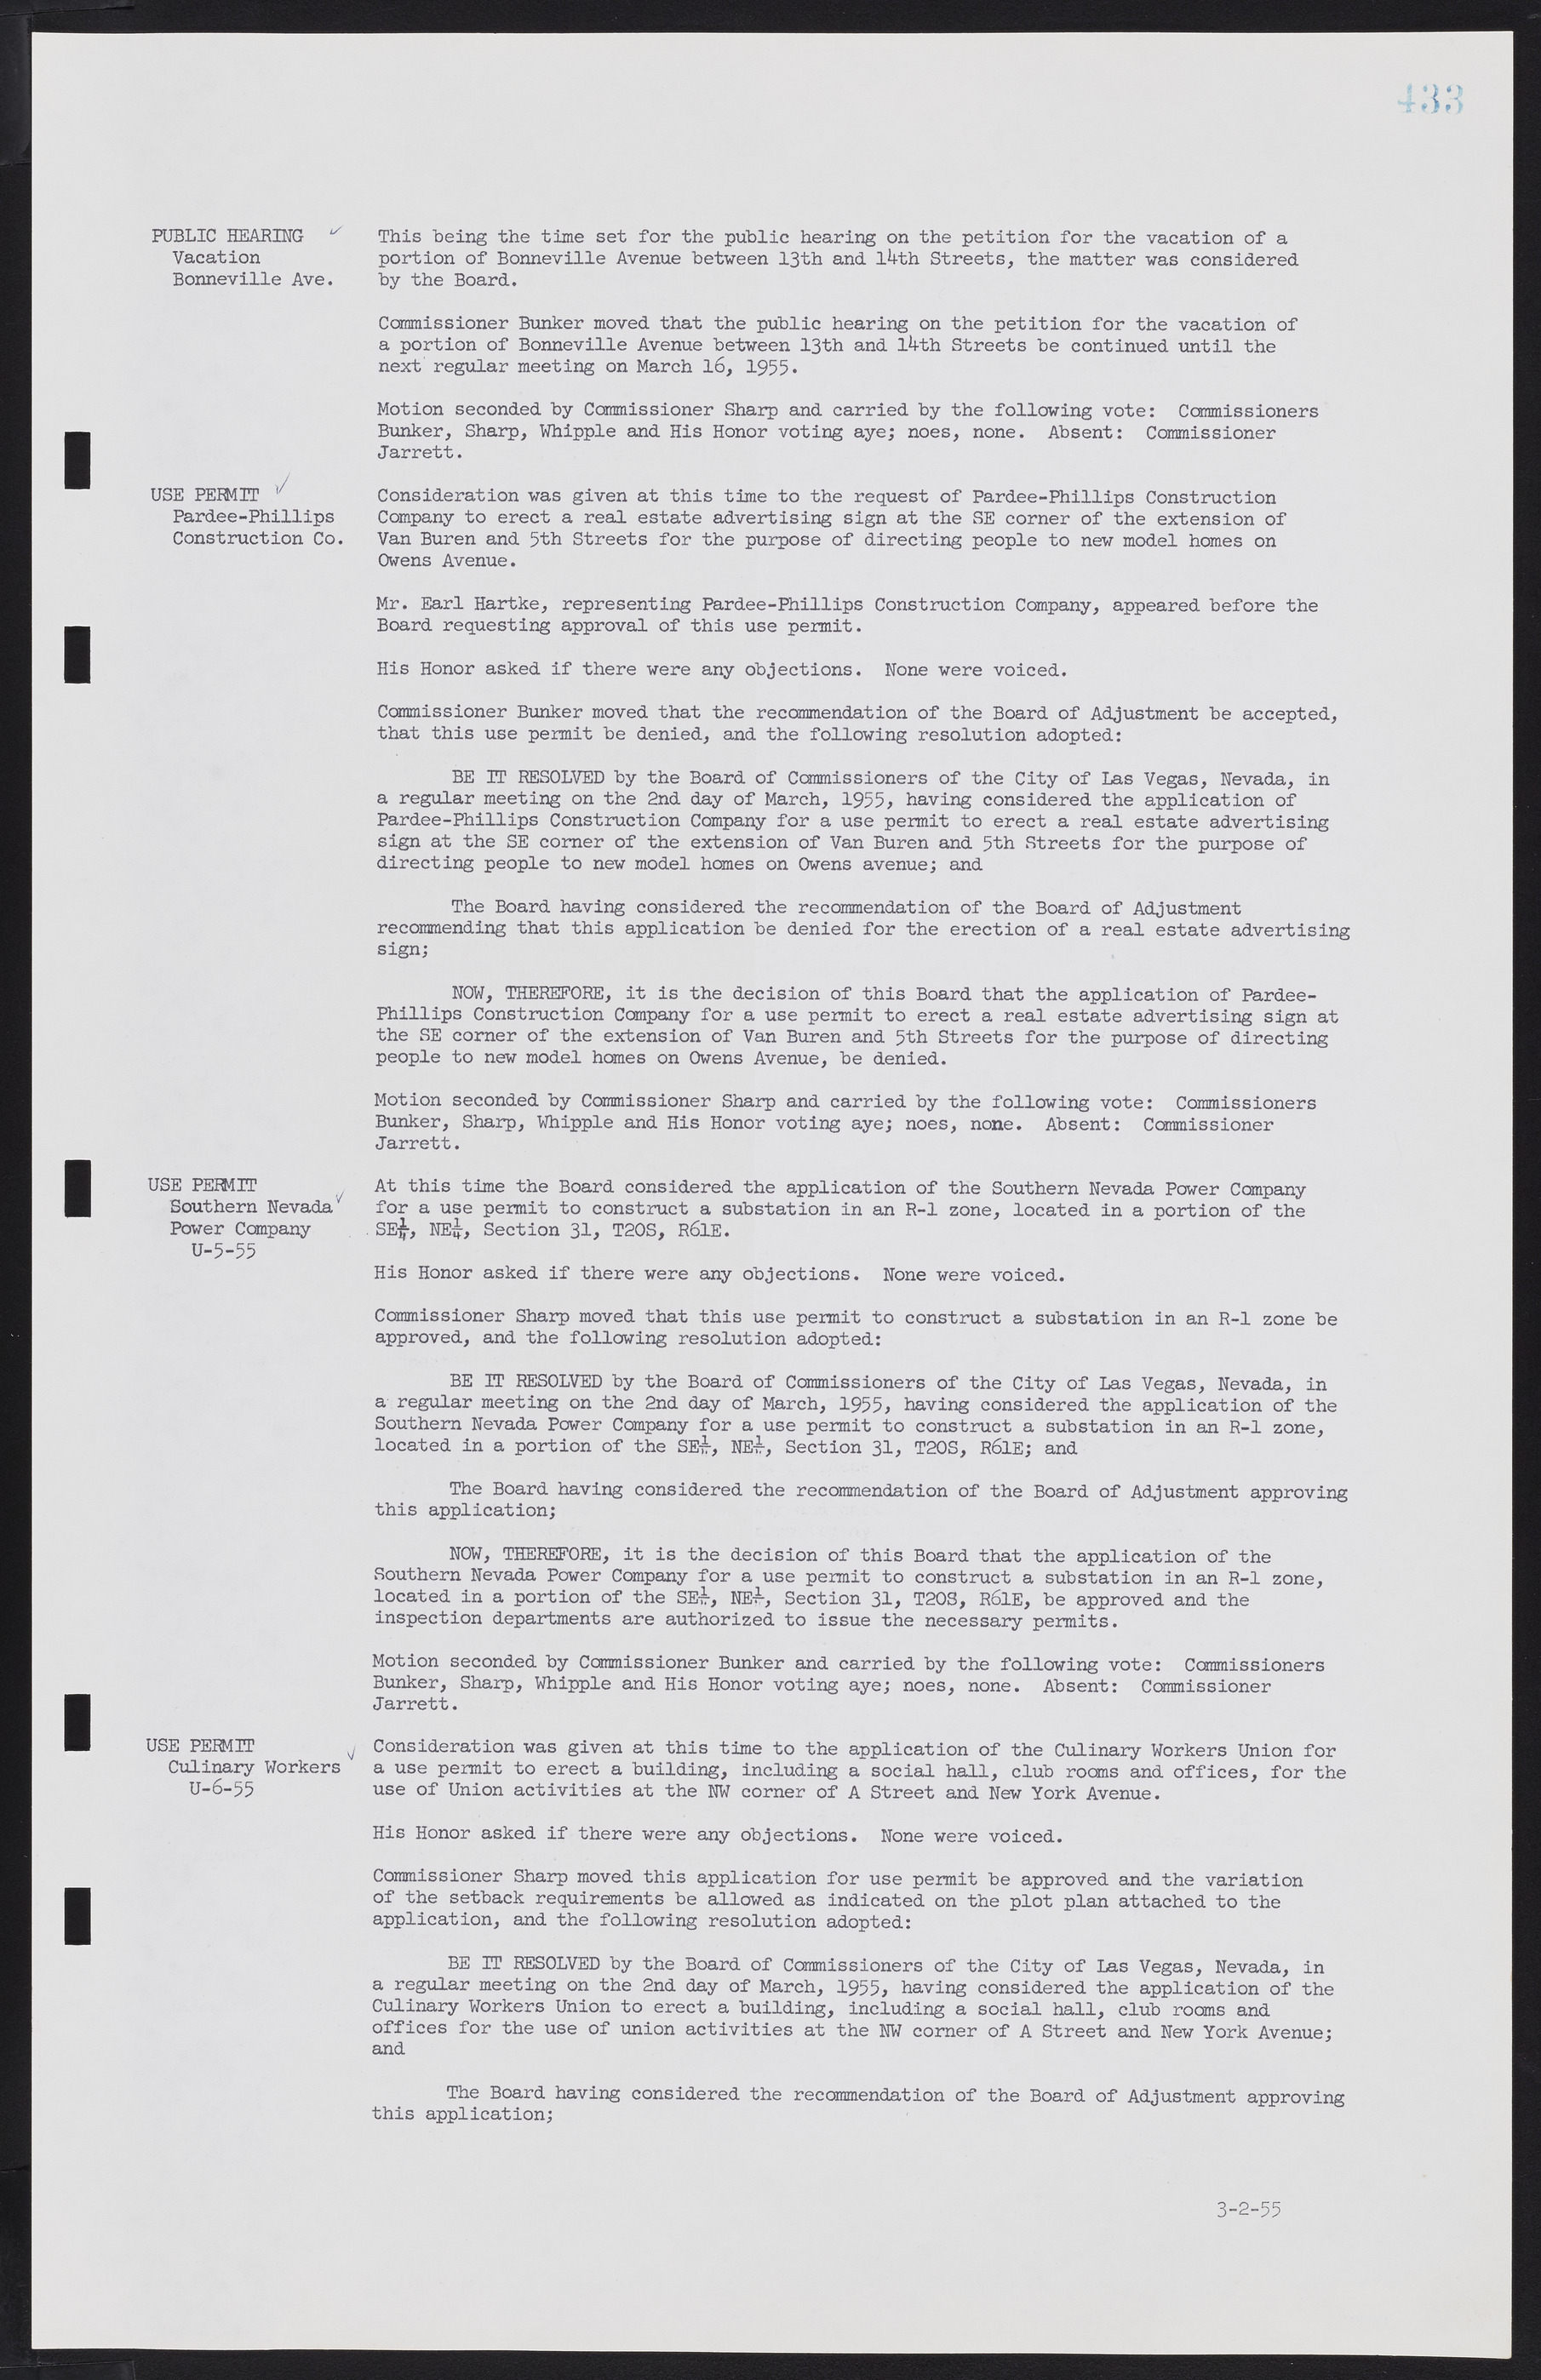 Las Vegas City Commission Minutes, February 17, 1954 to September 21, 1955, lvc000009-439